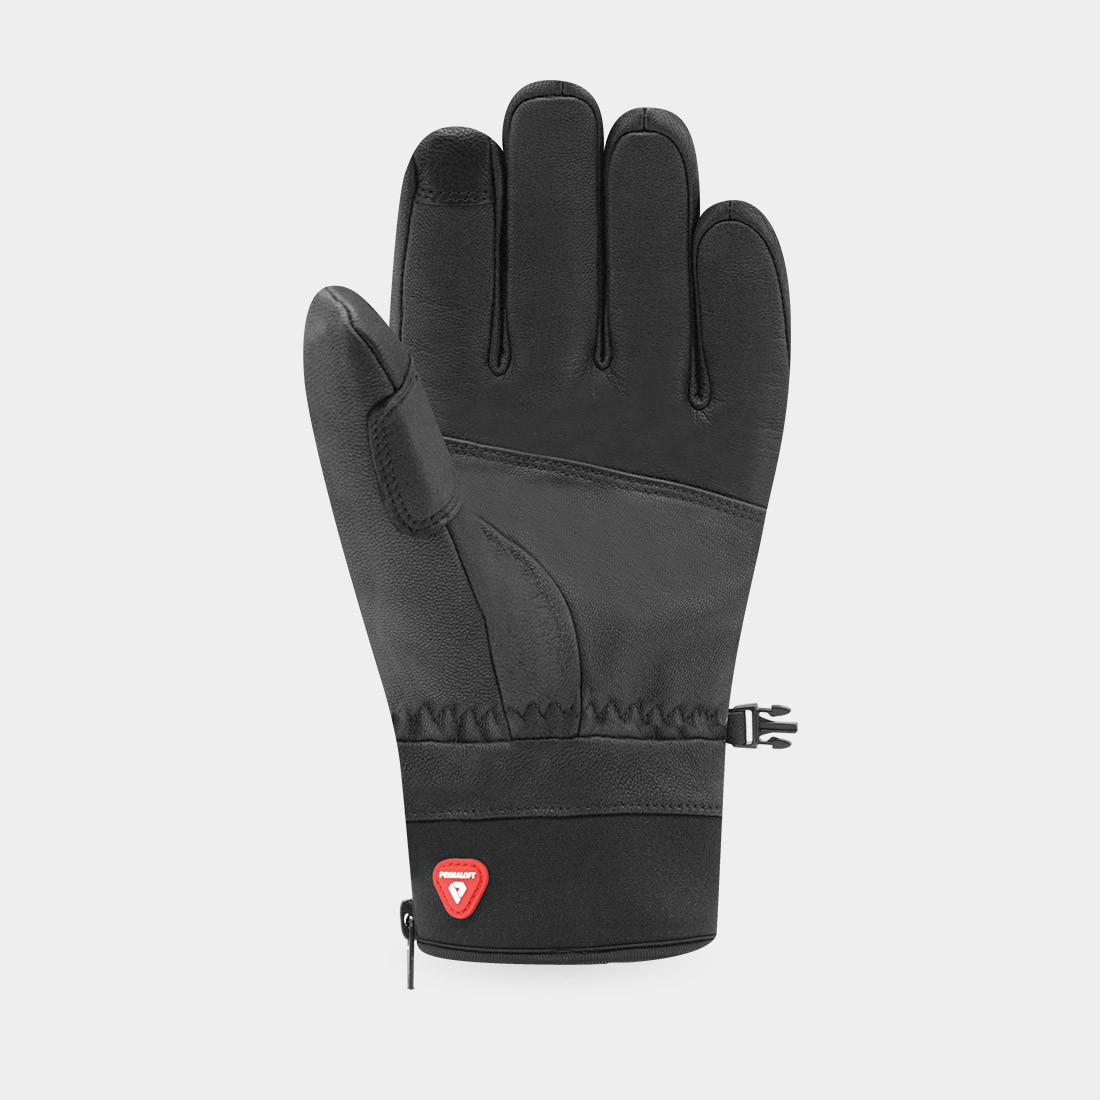 90 LEATHER 2 - leather ski gloves